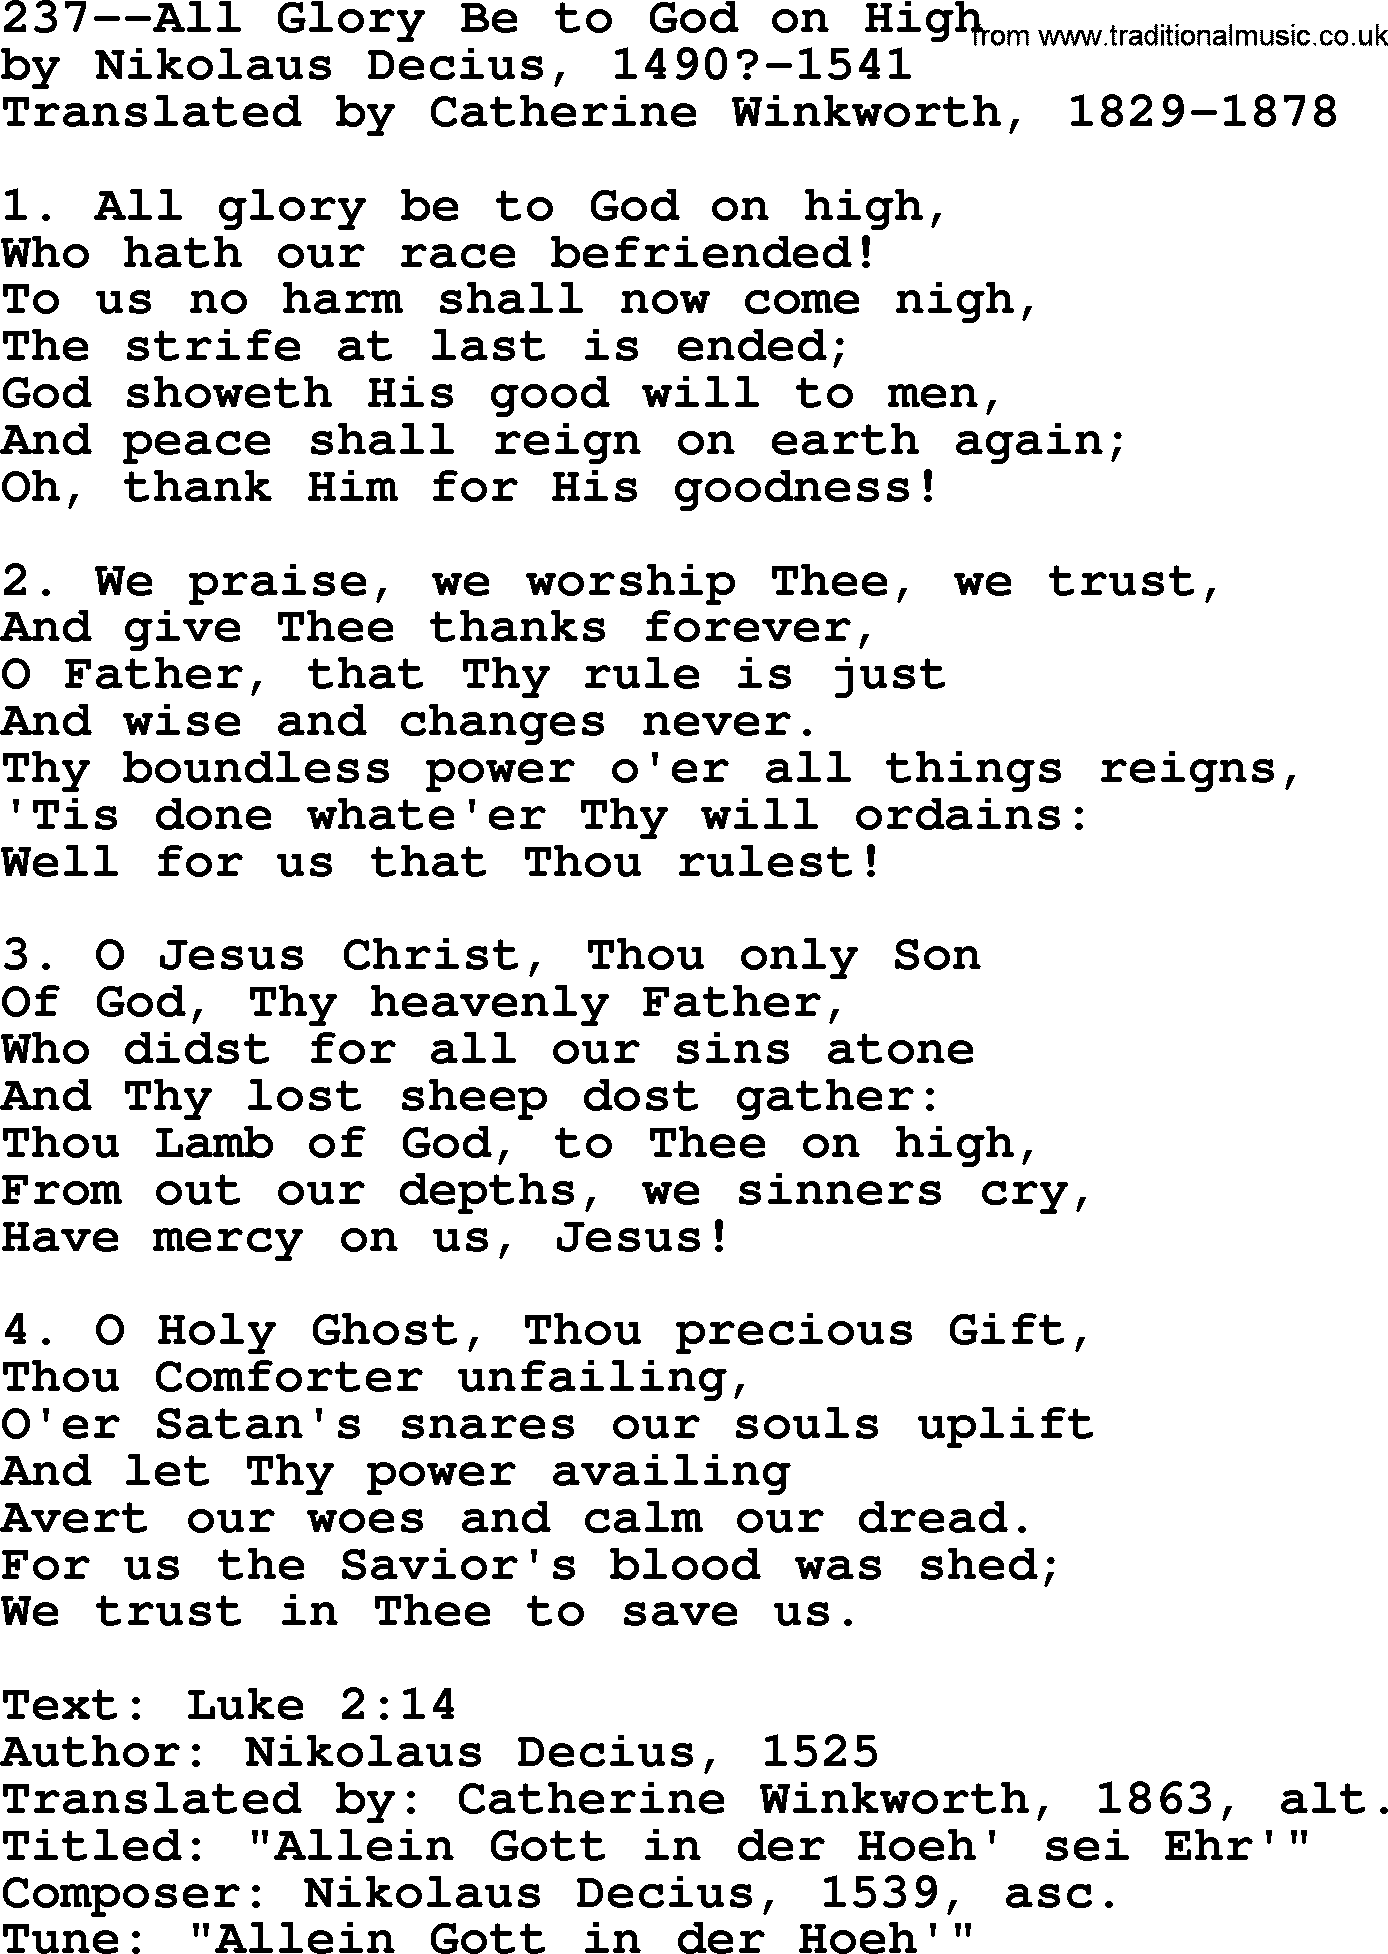 Lutheran Hymn: 237--All Glory Be to God on High.txt lyrics with PDF